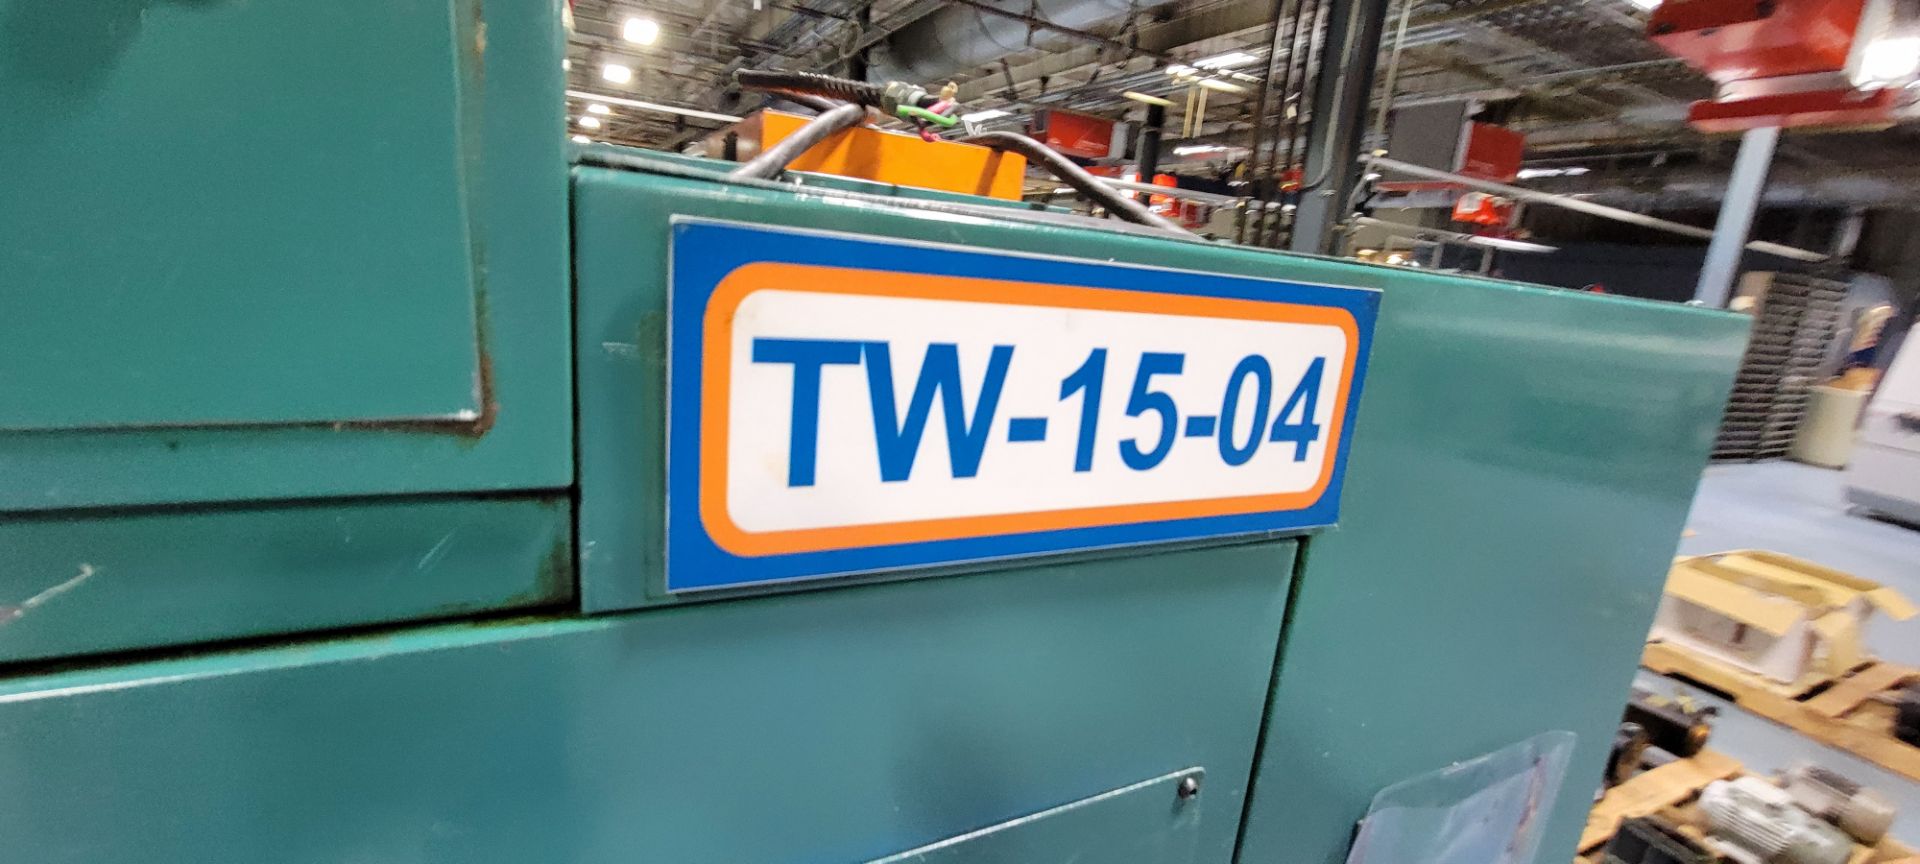 Nakamura-Tome #TMC-15 CNC Turning Center - Image 13 of 13